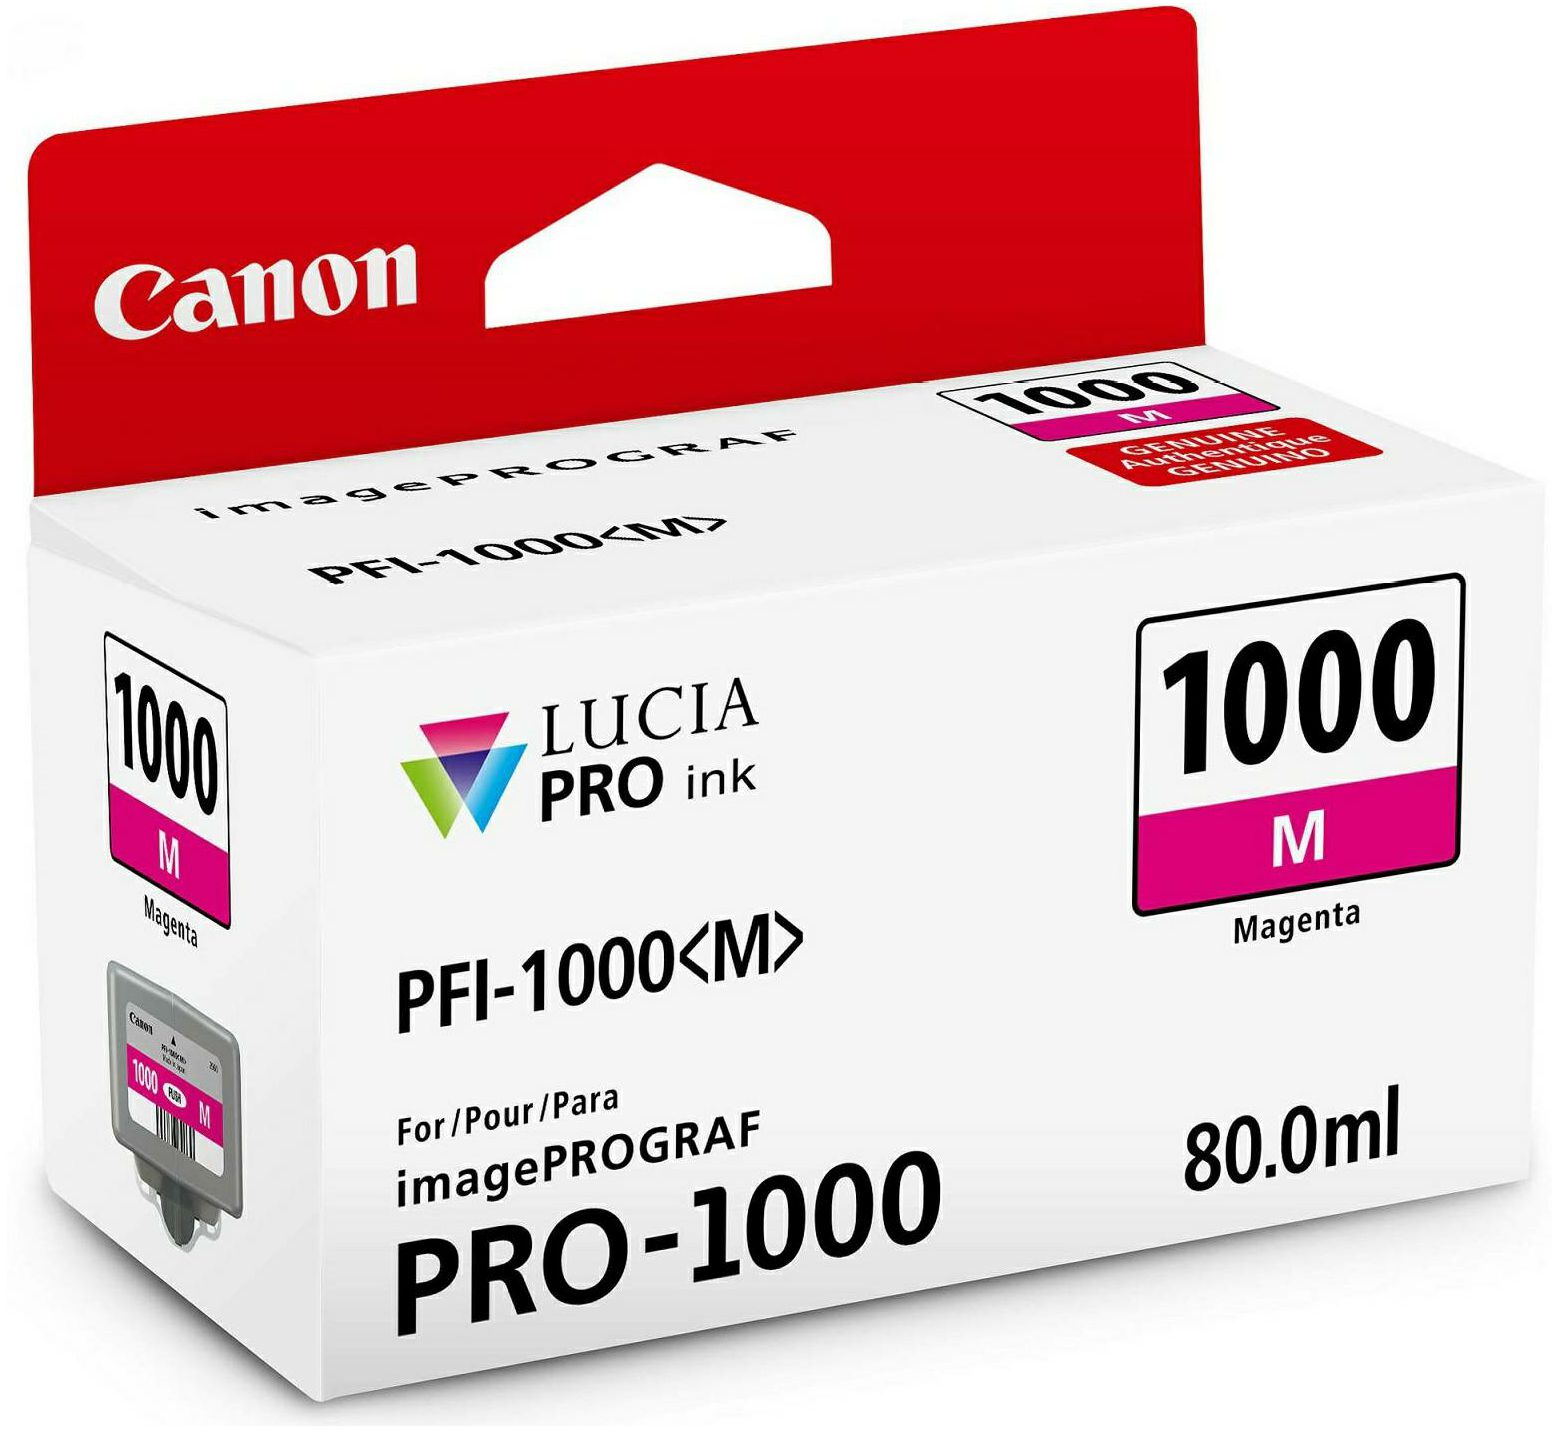 Canon Pigment Ink Tank PFI-1000 Lucia PRO Magenta 80ml PFI1000M purpurnocrvena tinta za printer imagePROGRAF PRO-1000 (0548C001AA)